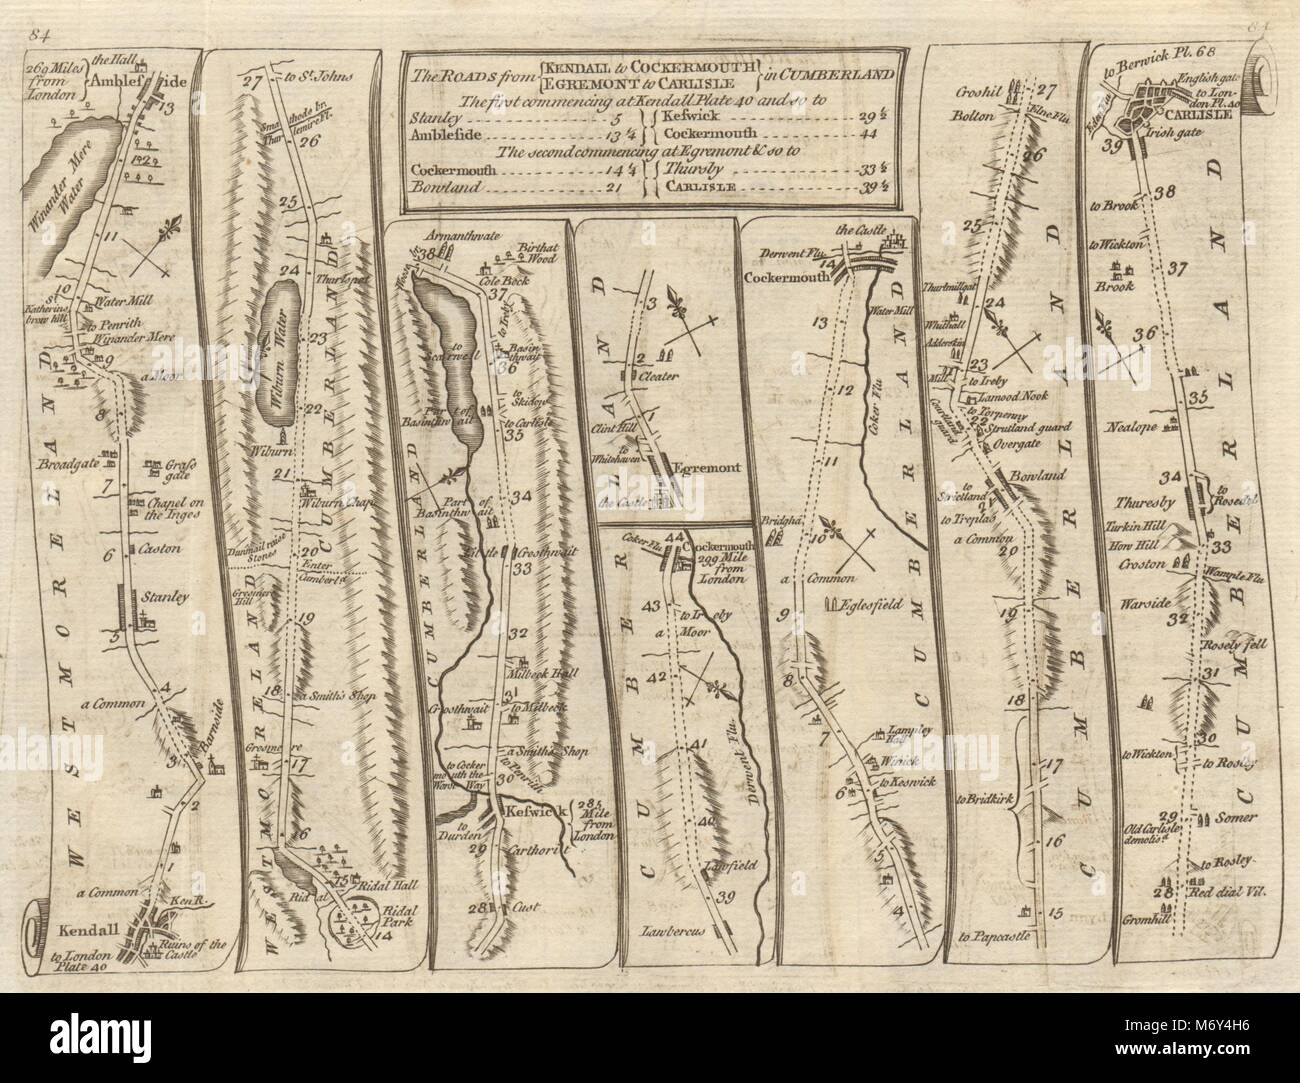 Kendall Ambleside Rydal Keswick Cockermouth Carlisle. KITCHIN road map 1767 Stock Photo